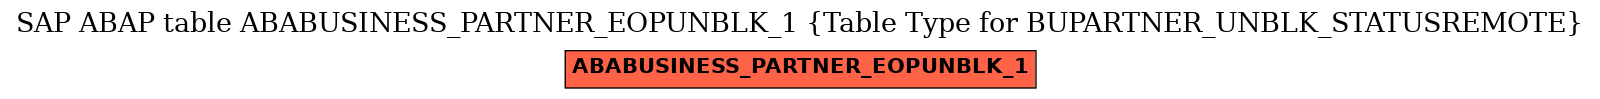 E-R Diagram for table ABABUSINESS_PARTNER_EOPUNBLK_1 (Table Type for BUPARTNER_UNBLK_STATUSREMOTE)